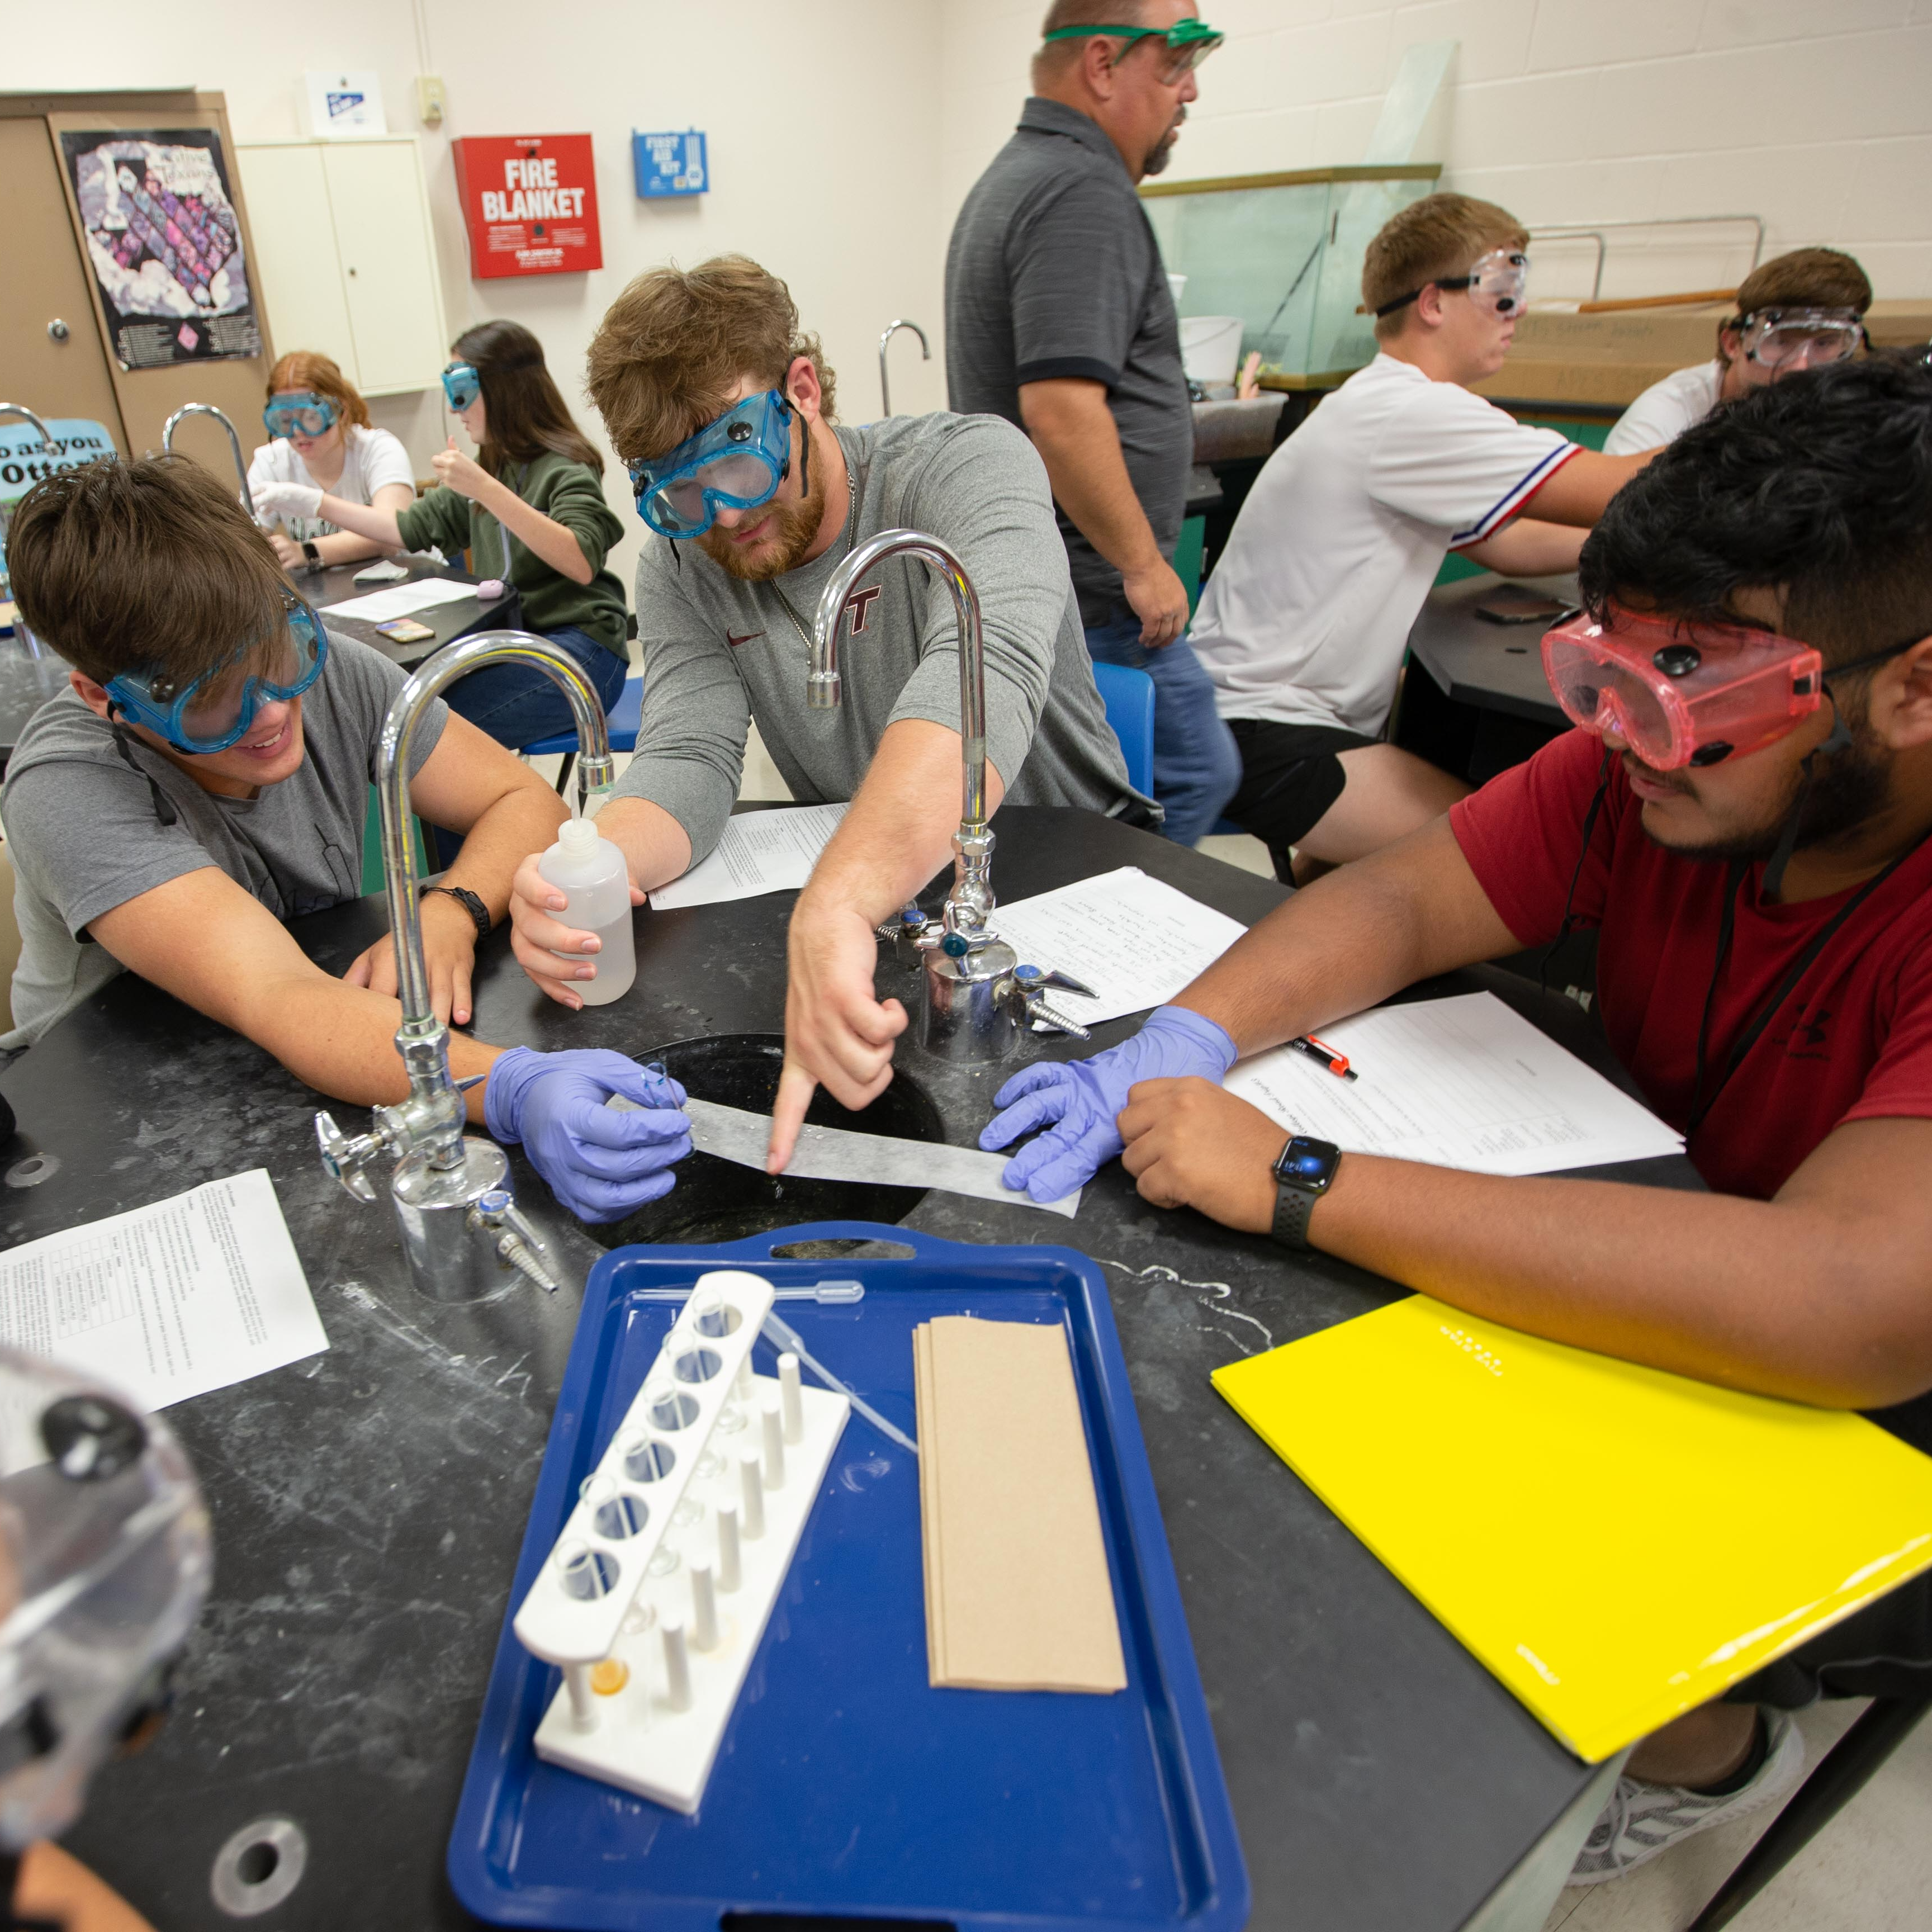 3 high school boys working  in science lab